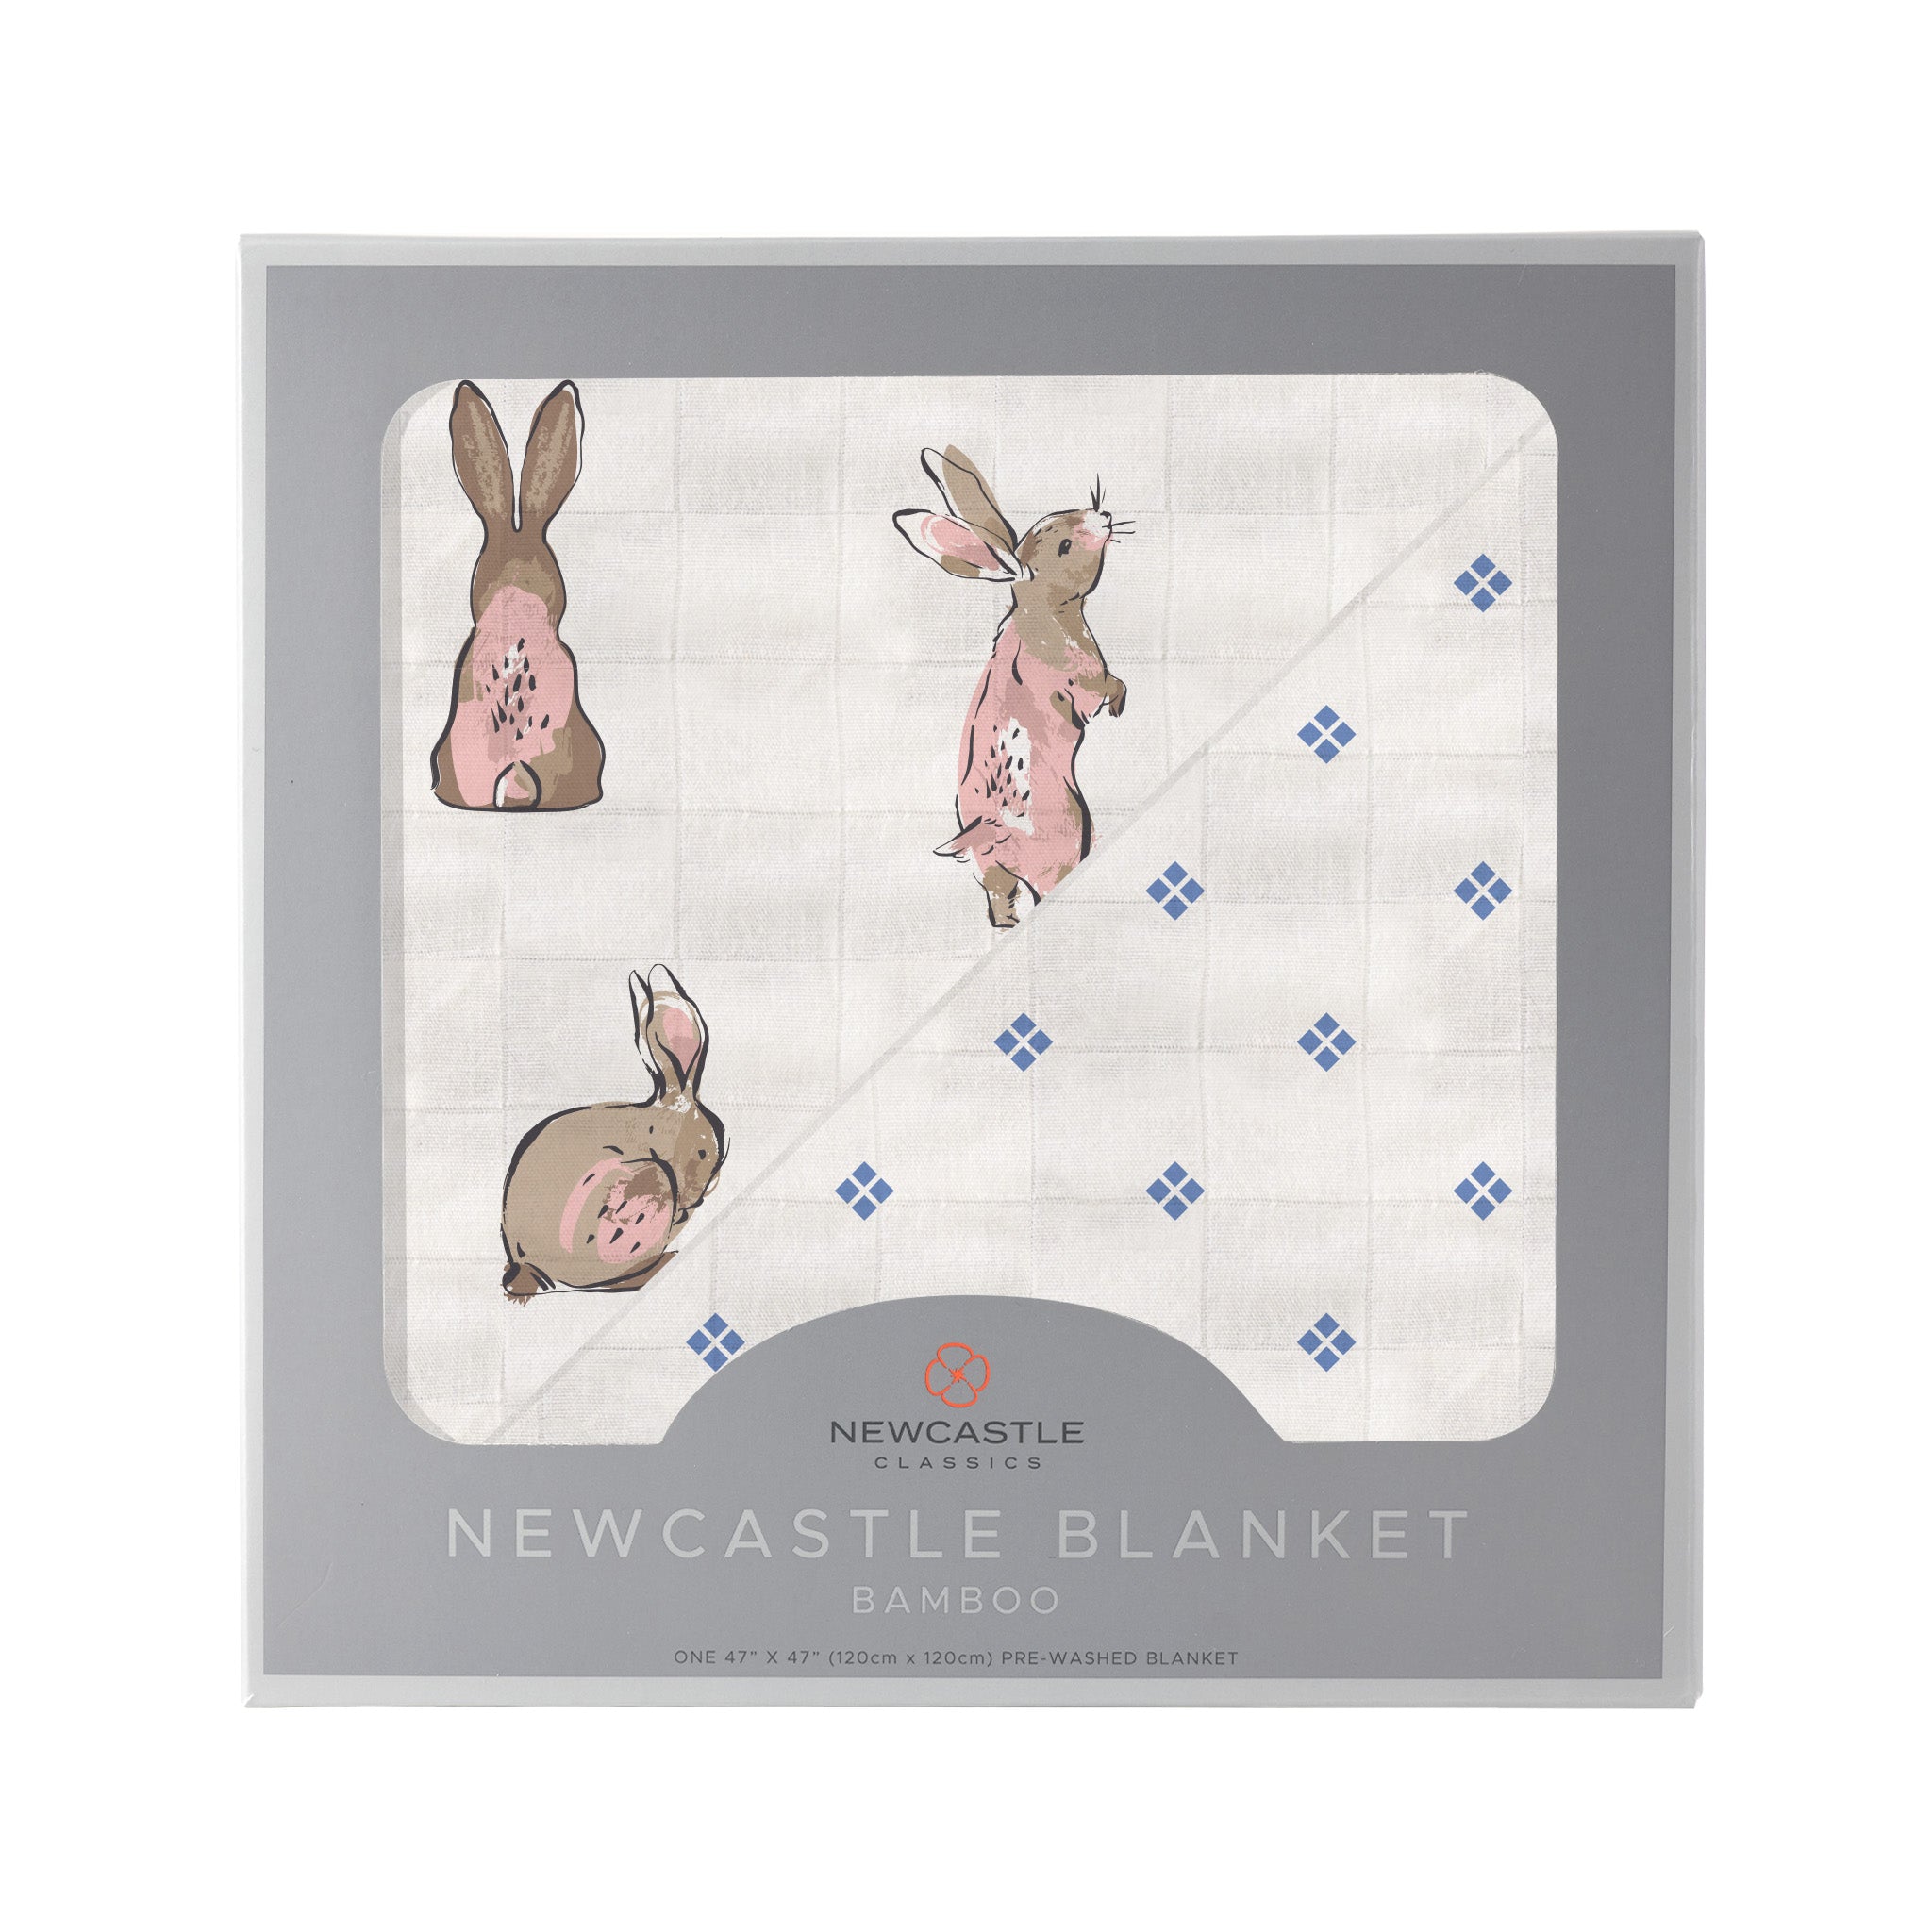 Beautiful baby blanket with bunnies